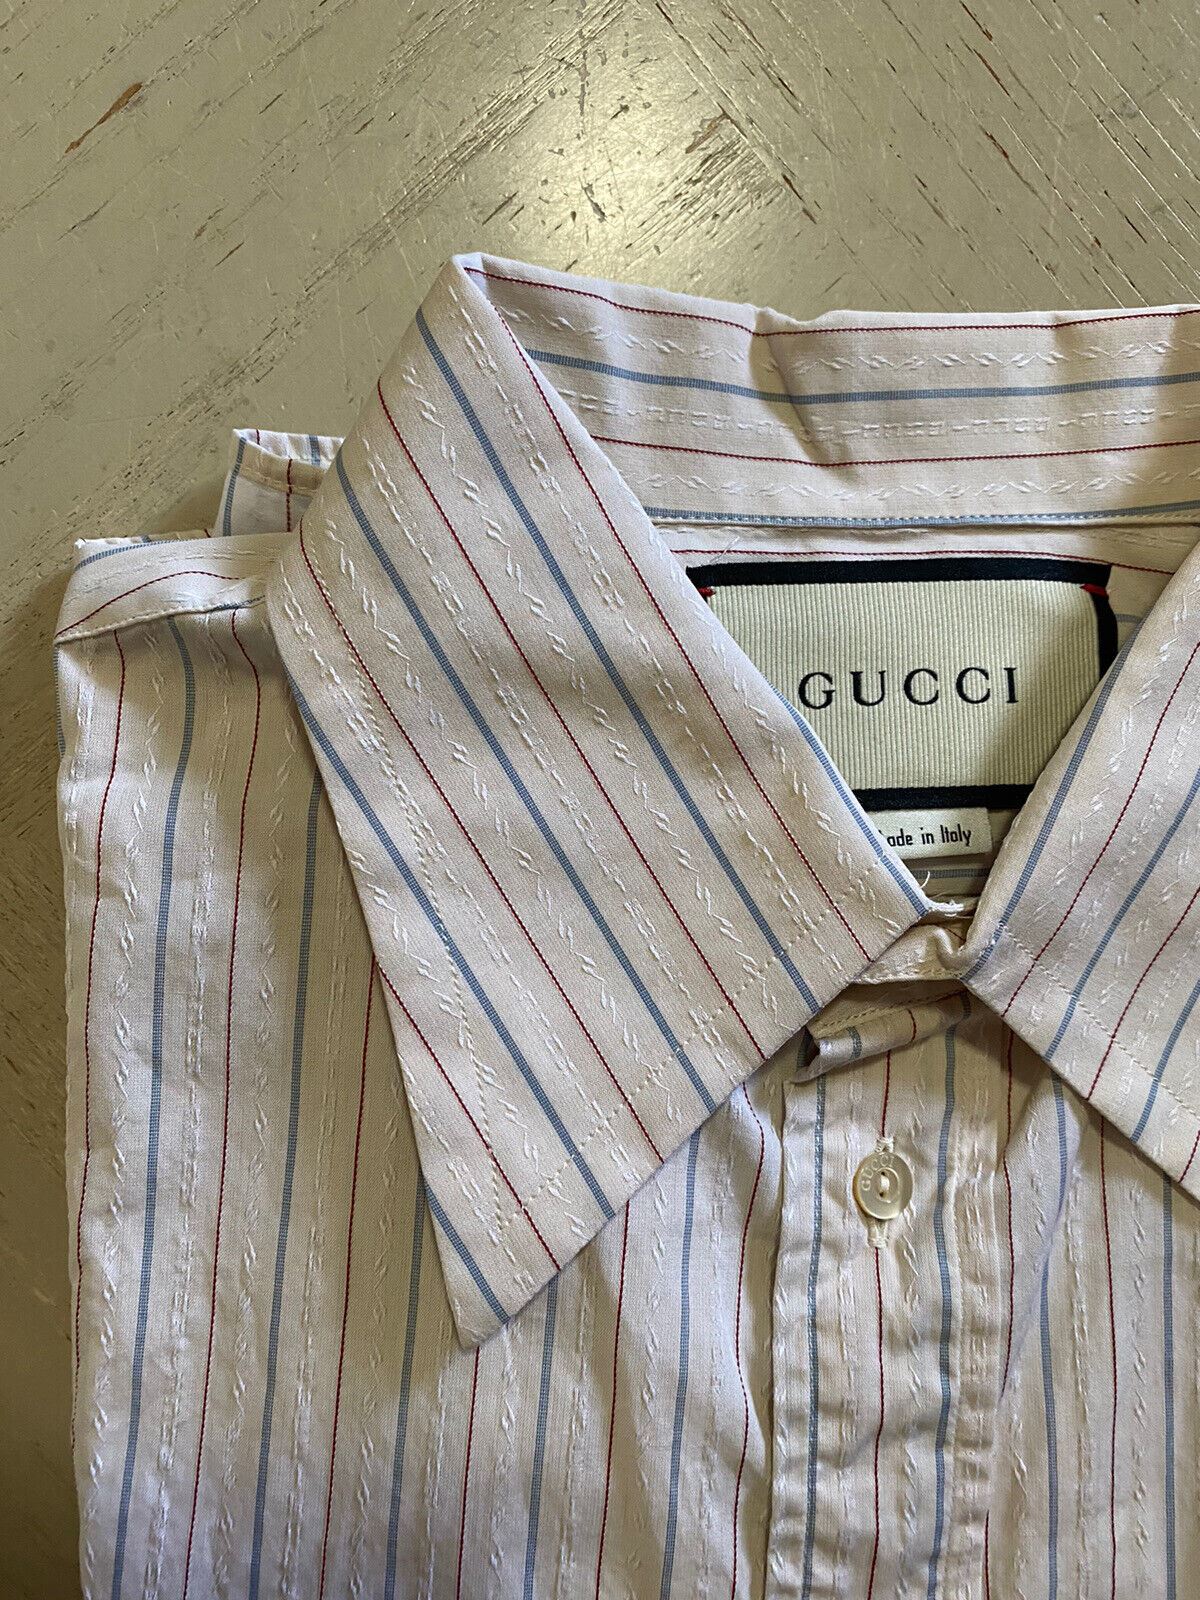 New Gucci Men’s Dress Shirt White/Multicolor 39/15.5 Italy